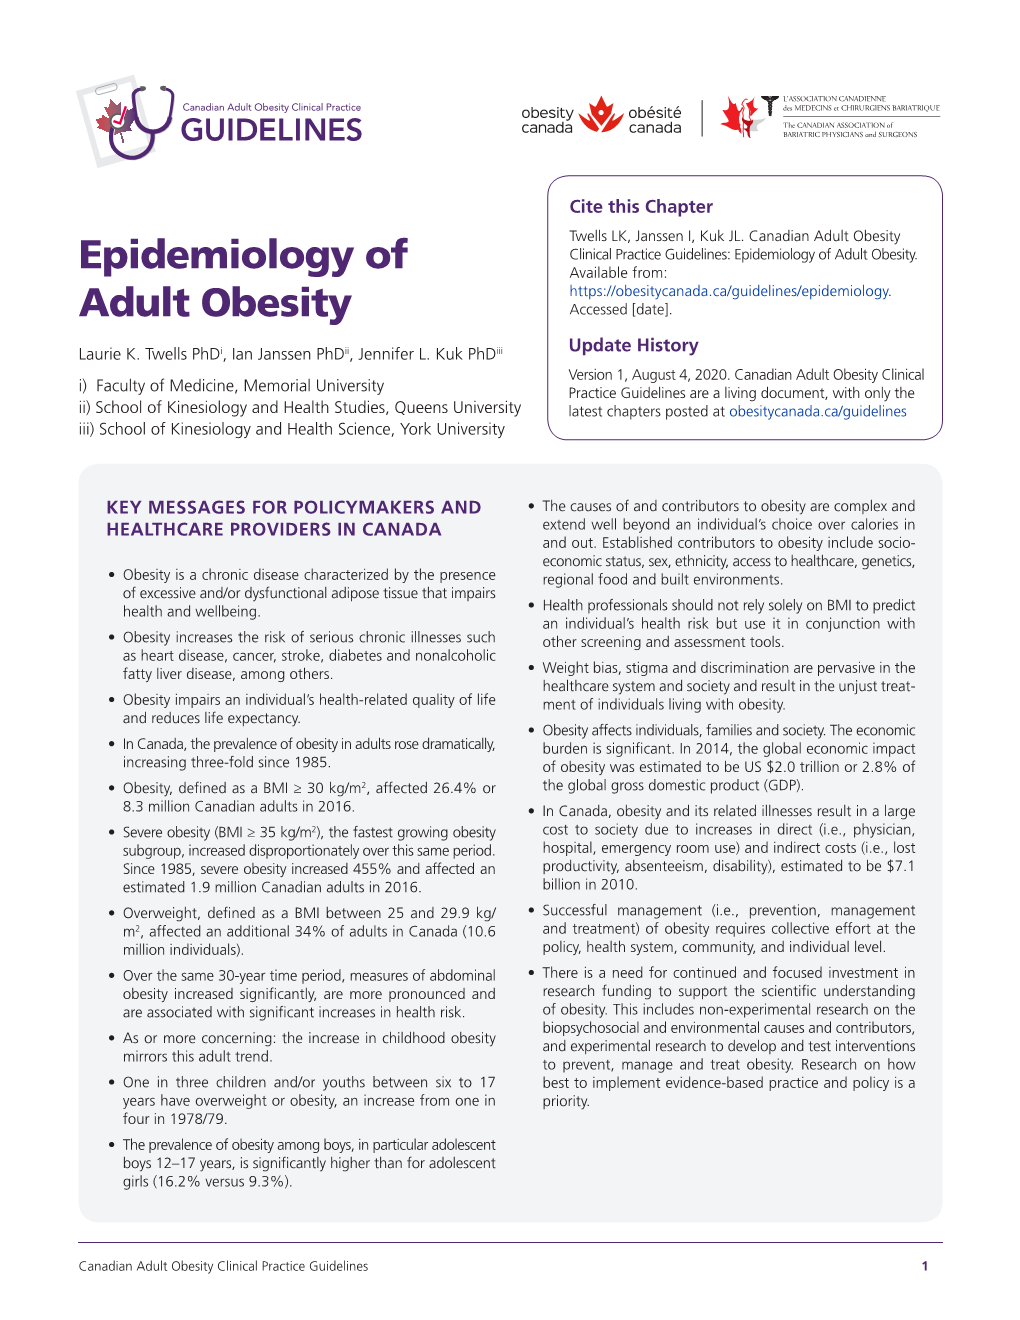 Epidemiology of Adult Obesity